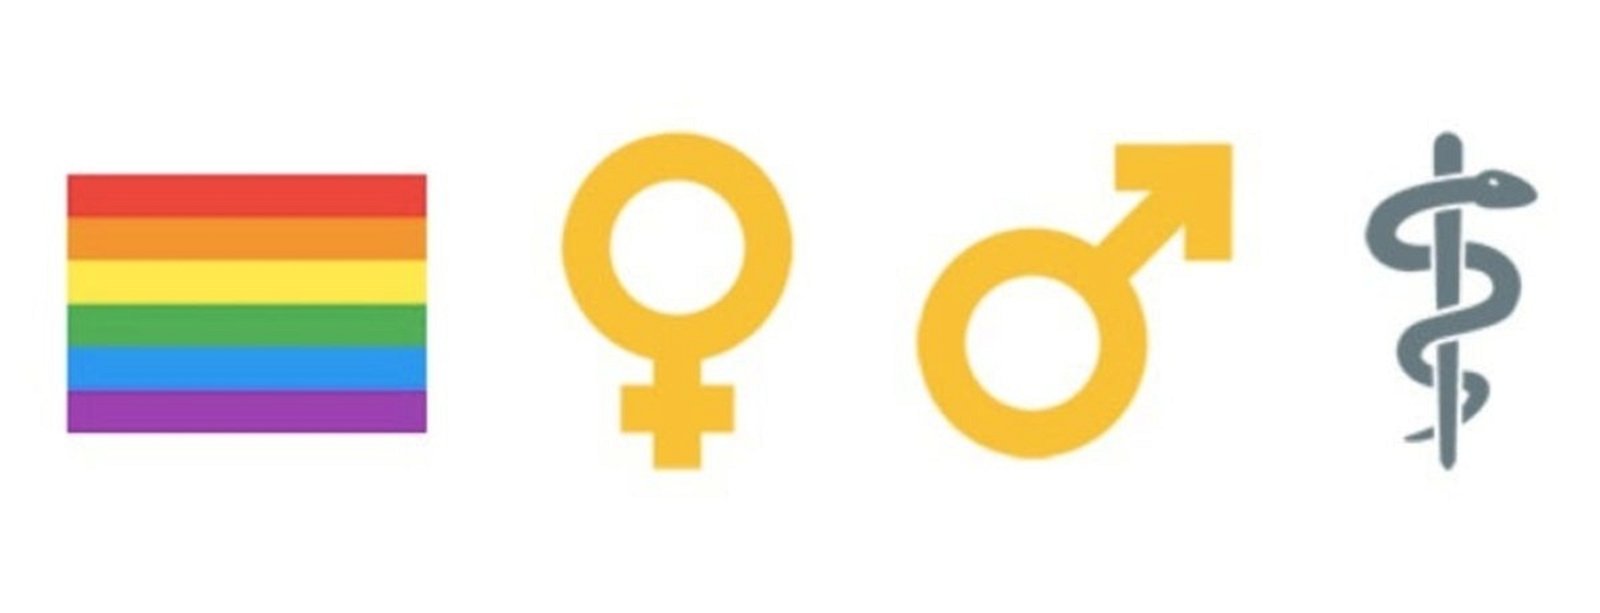 emojis-simbolos-nuevos-android-7-1-nougat